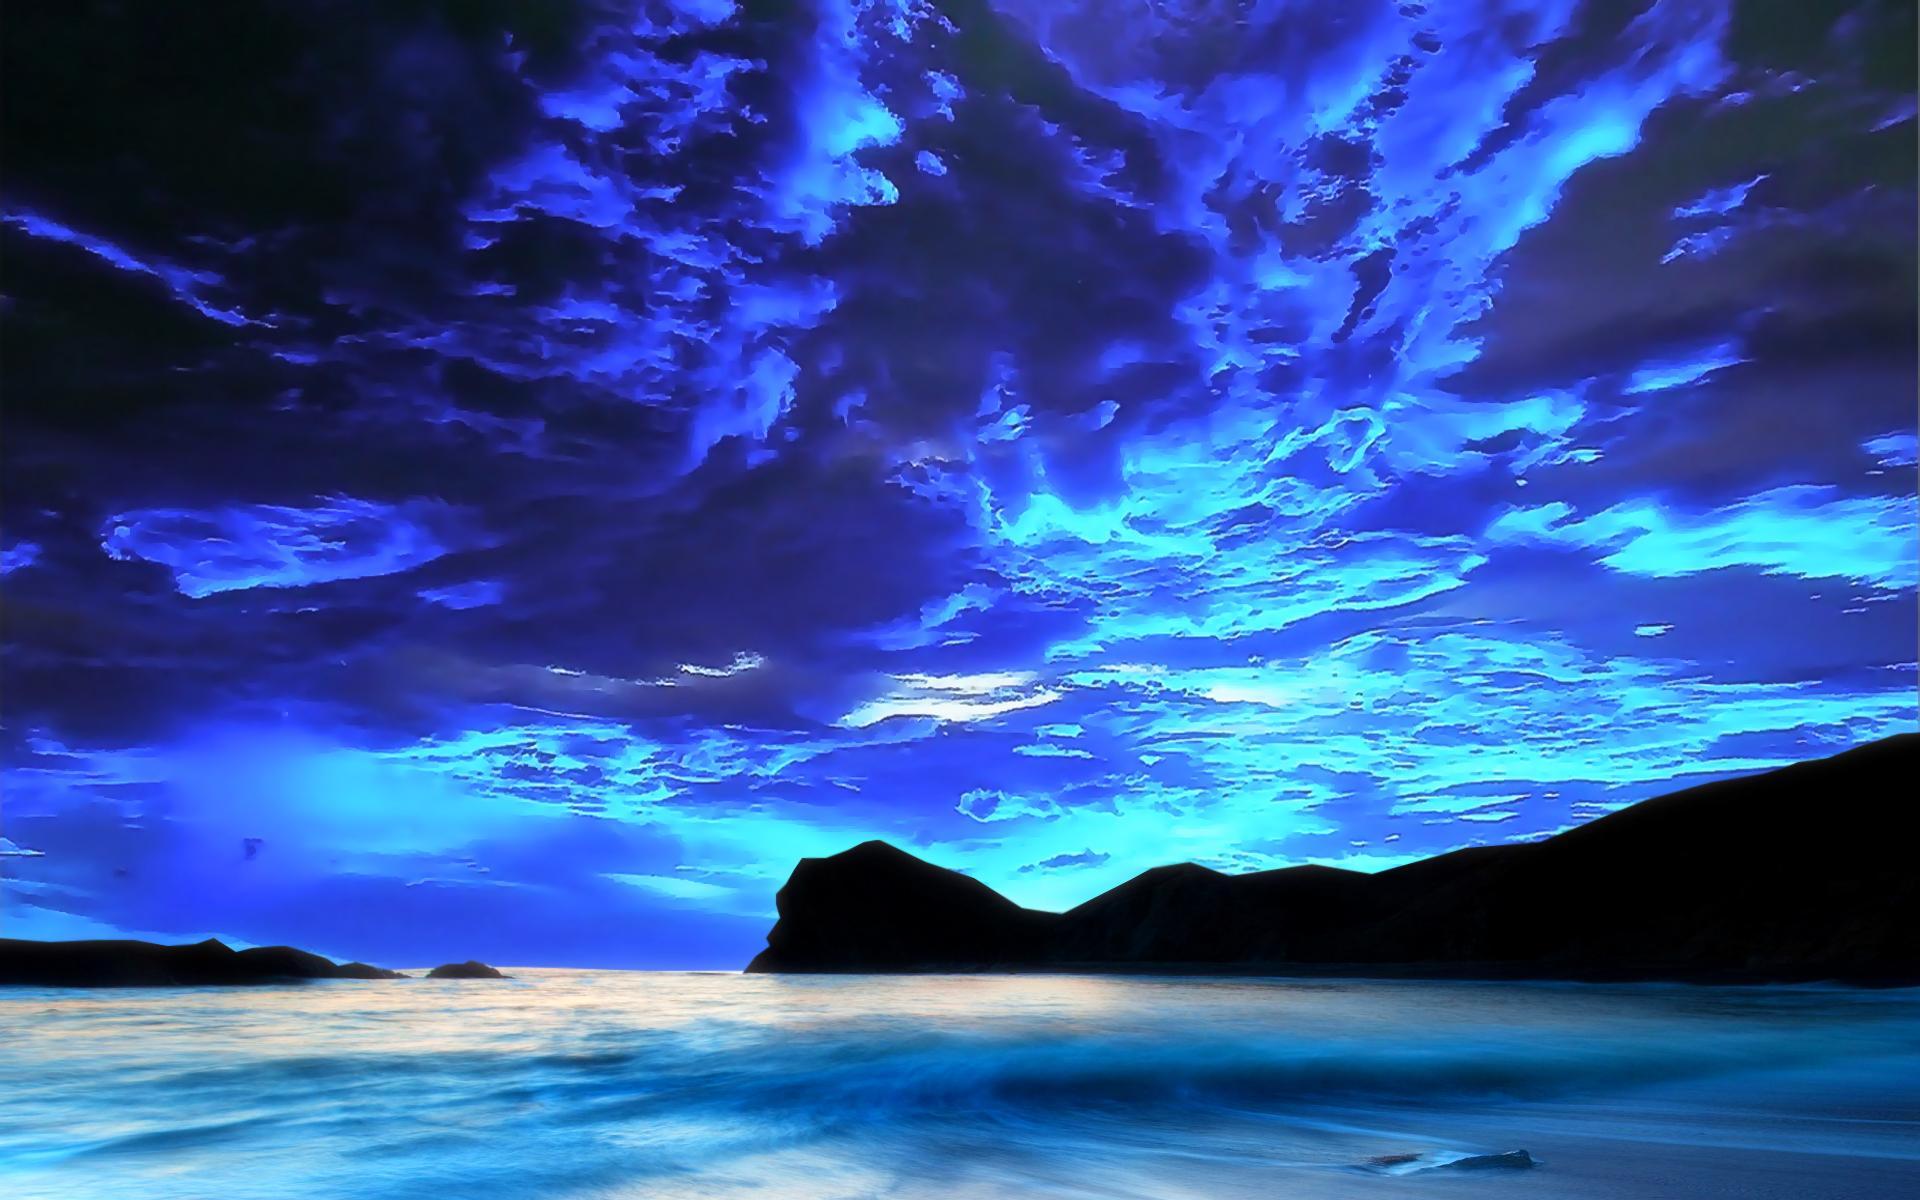 Dark Blue Sky Wallpapers - Top Free Dark Blue Sky Backgrounds